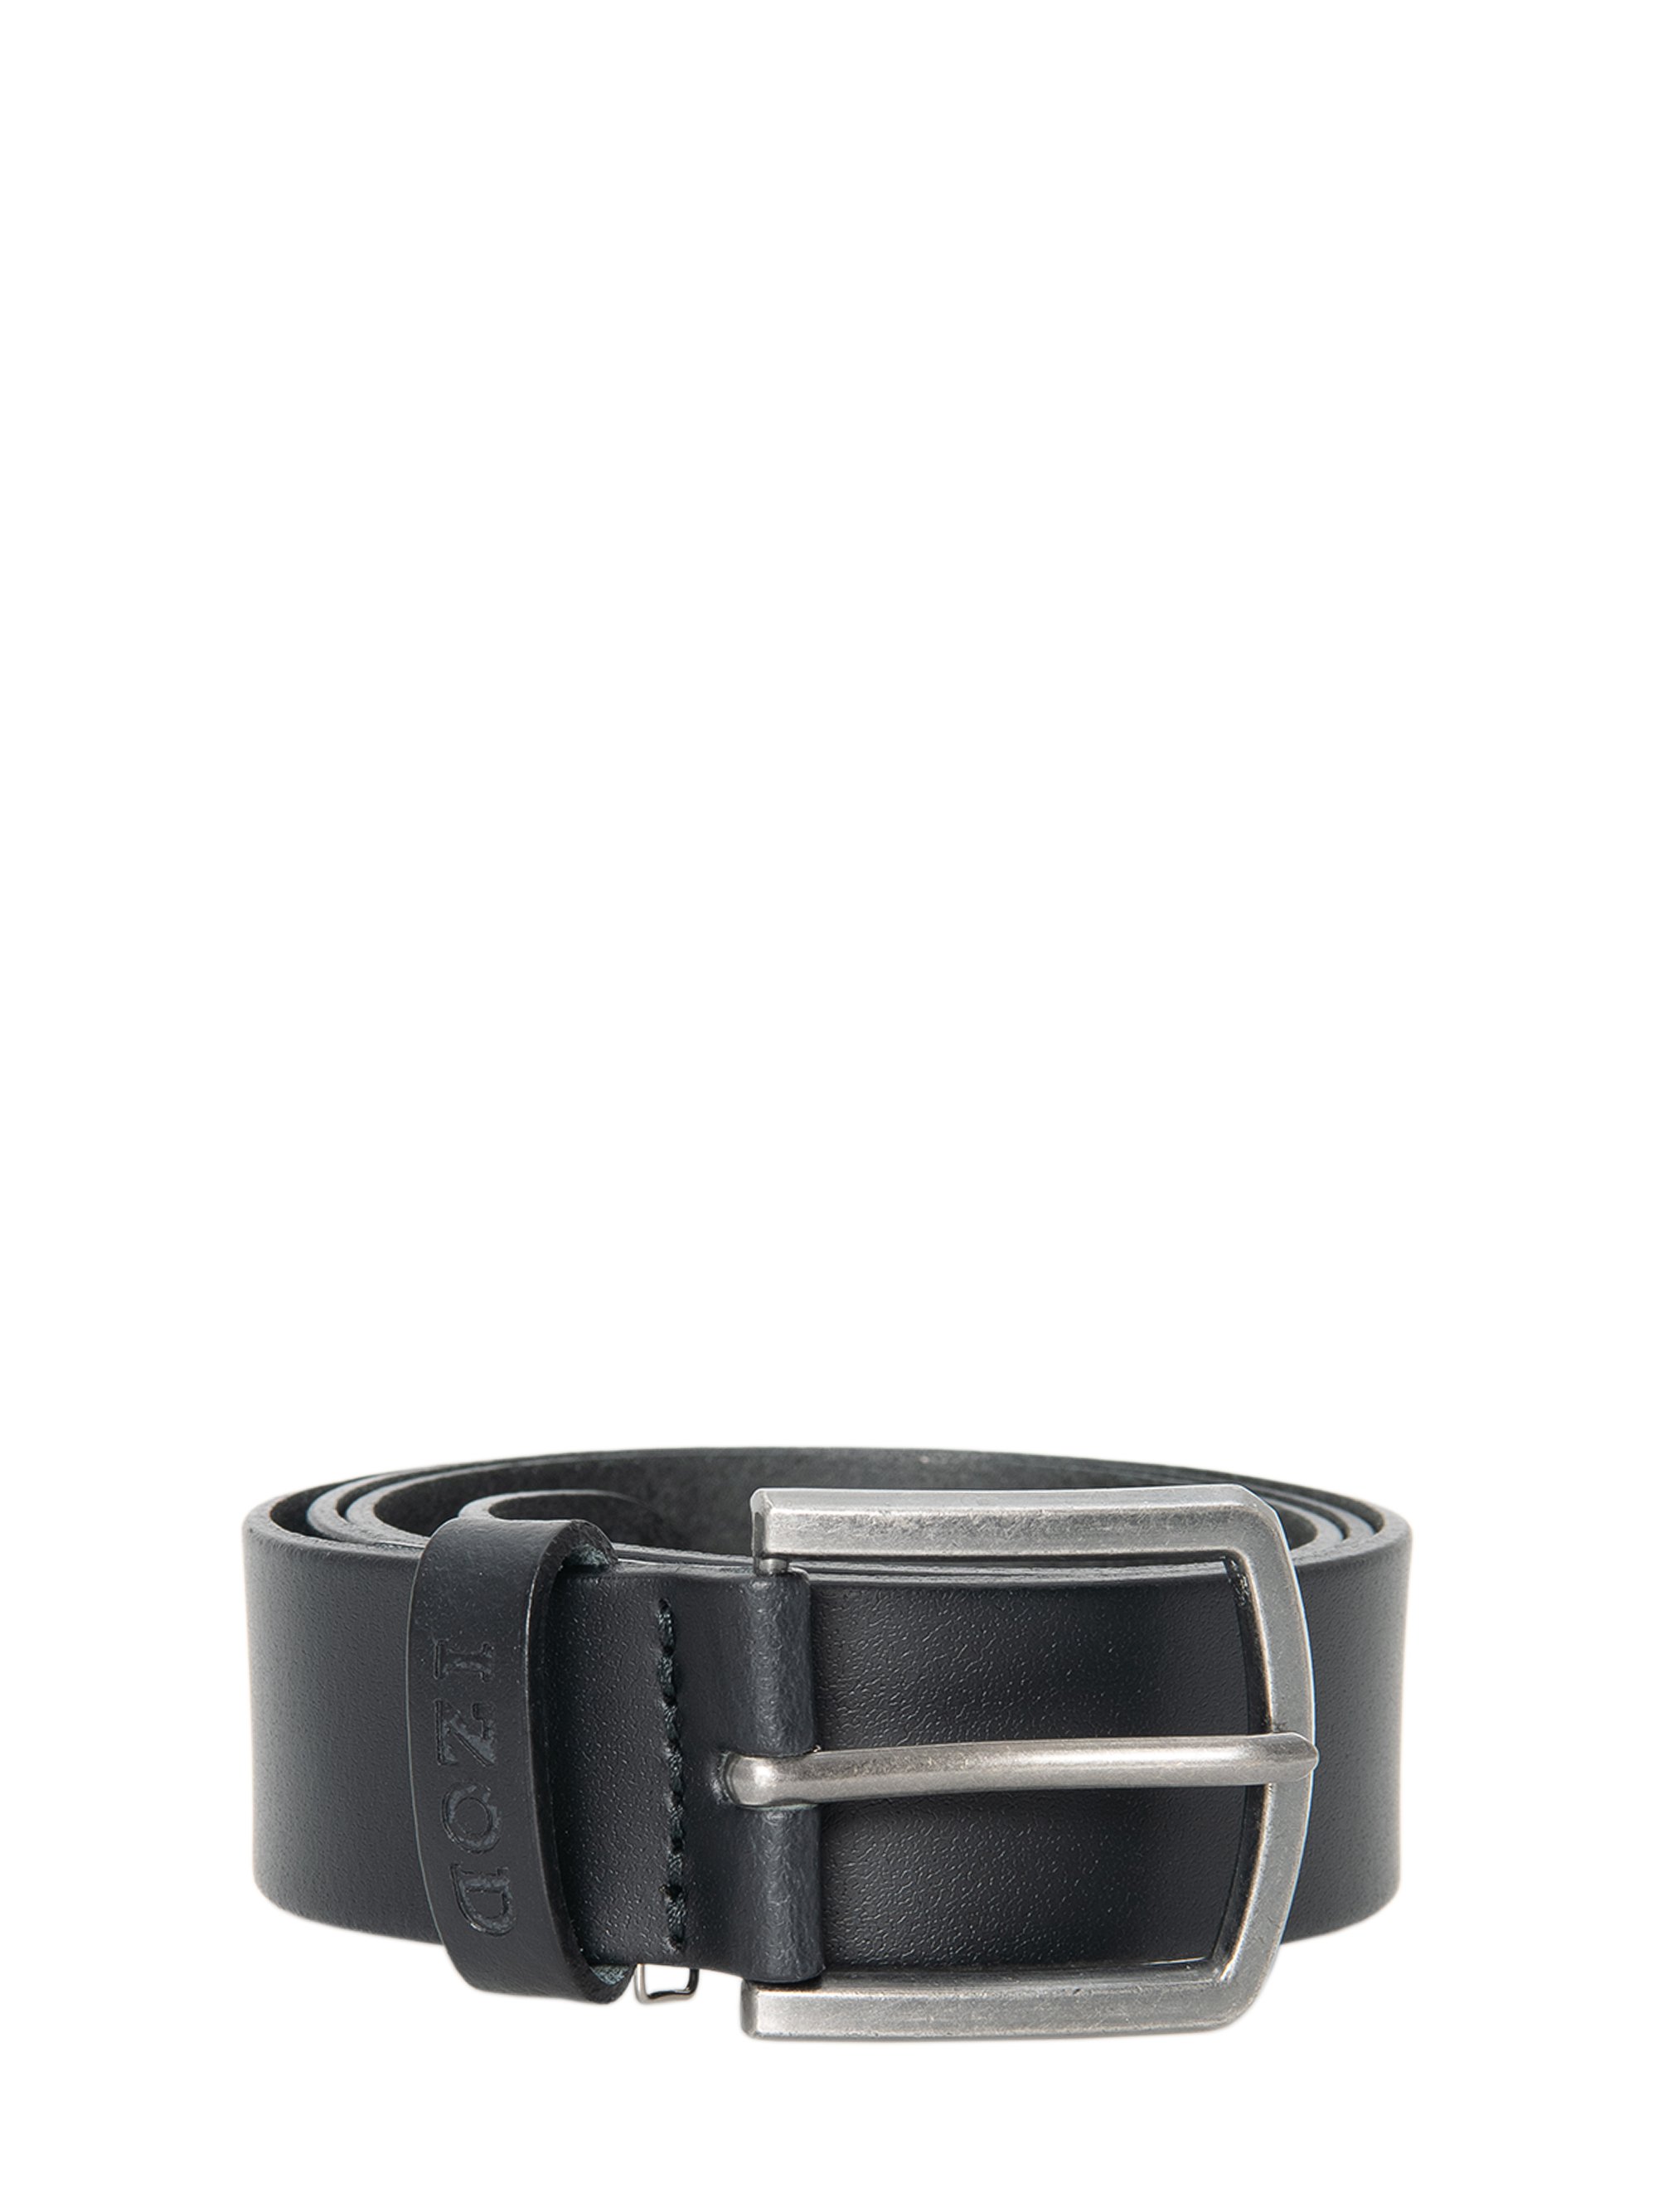 Men's leather belt IZOD | Soulz.lt